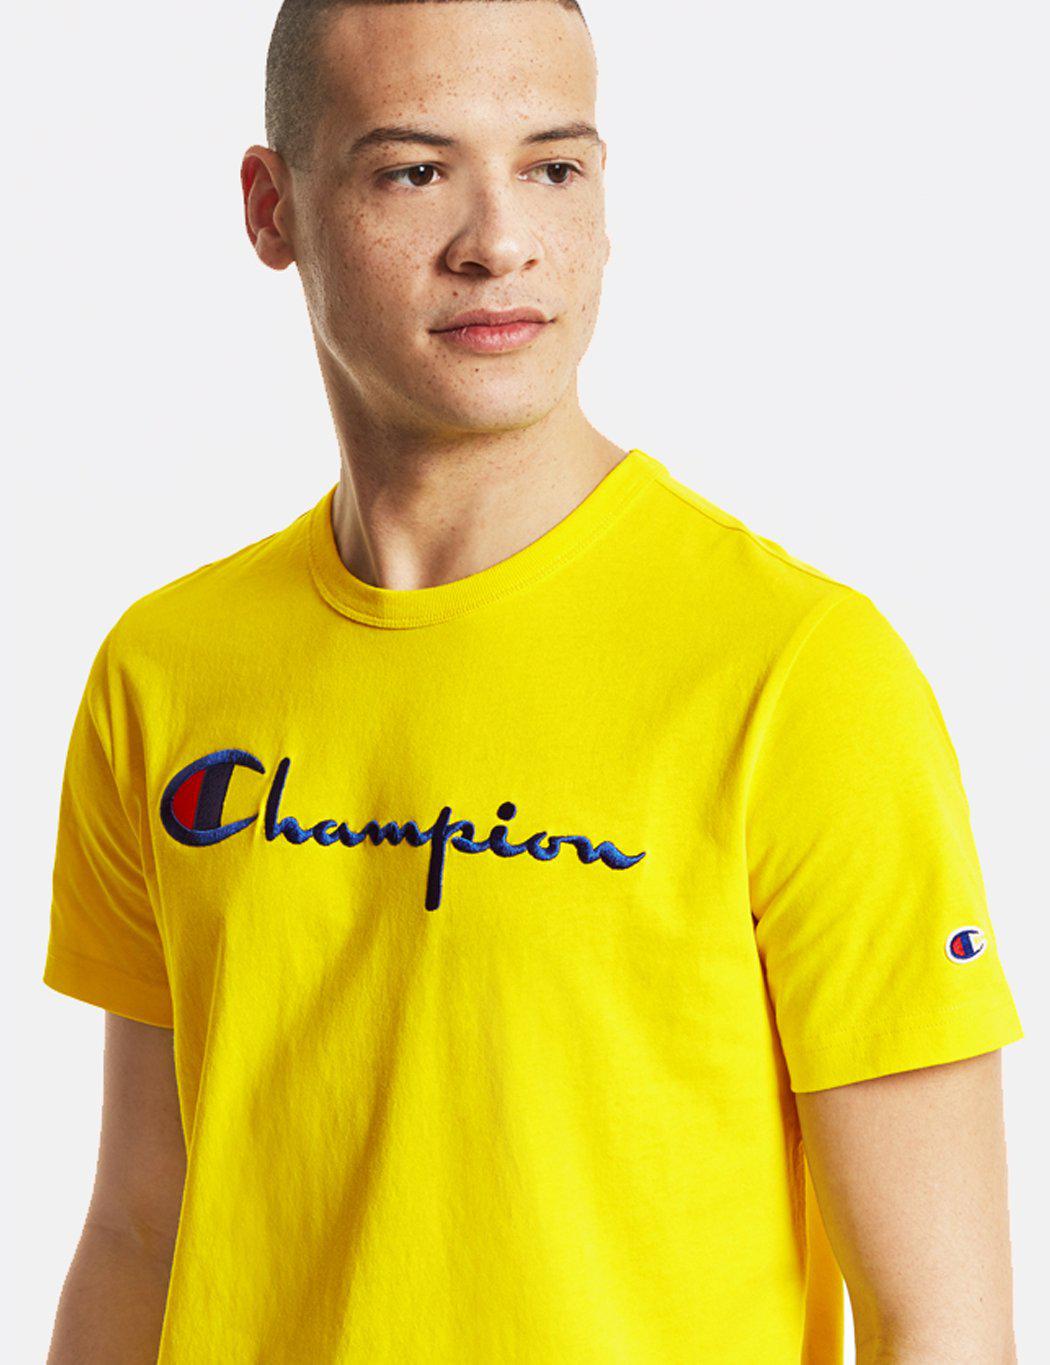 yellow champion shirt men